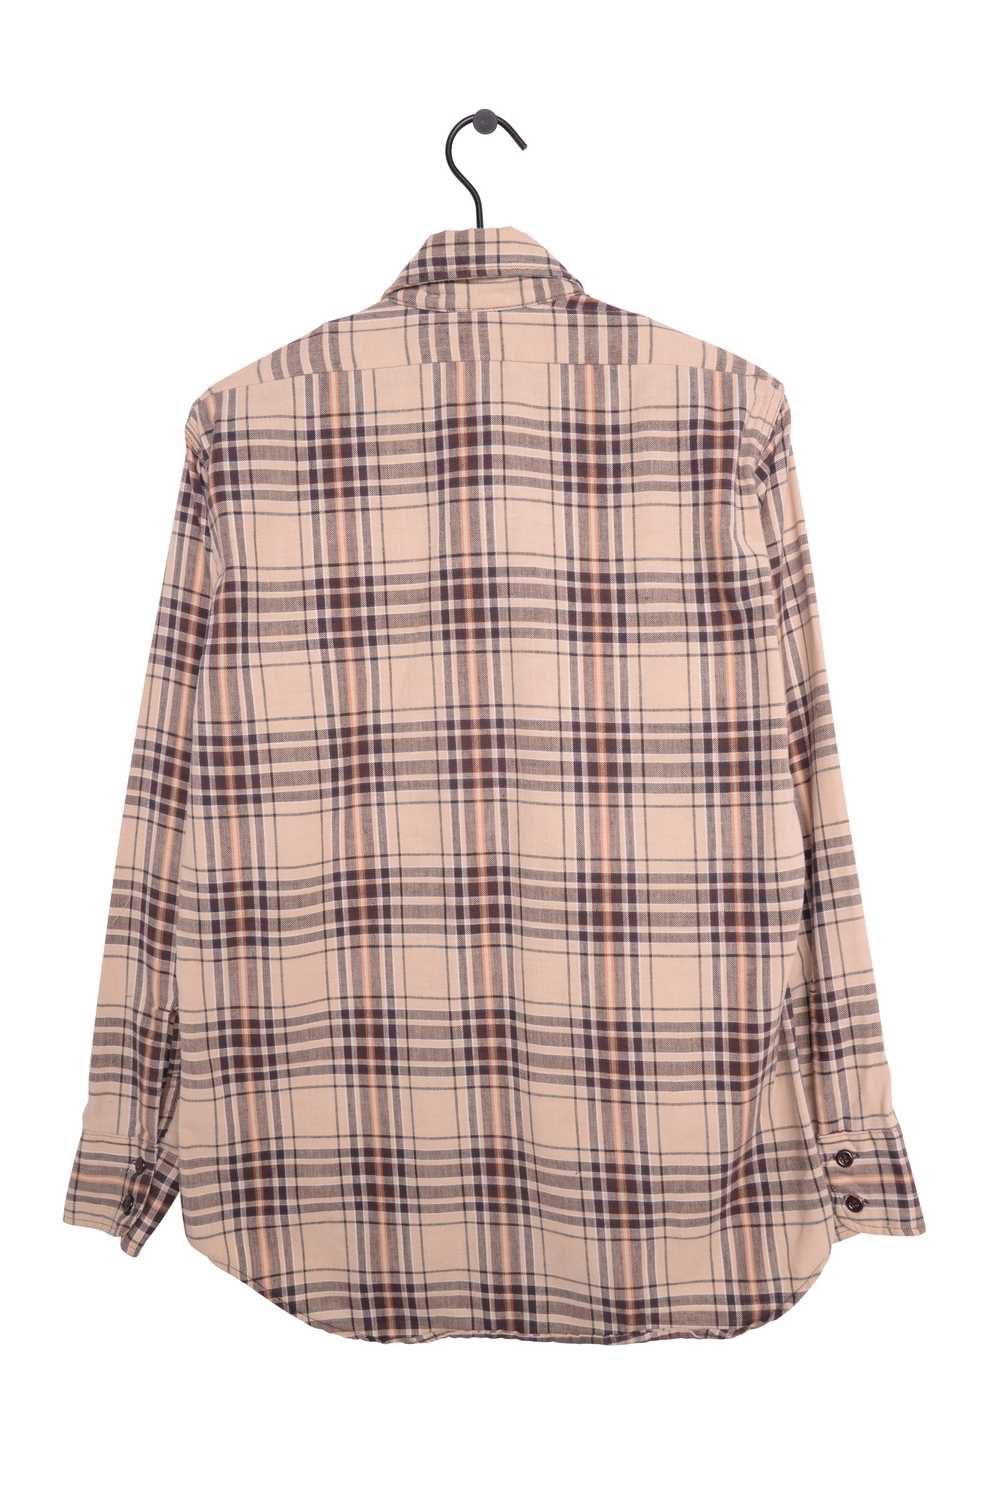 1970s Levi's Flannel Shirt - image 3